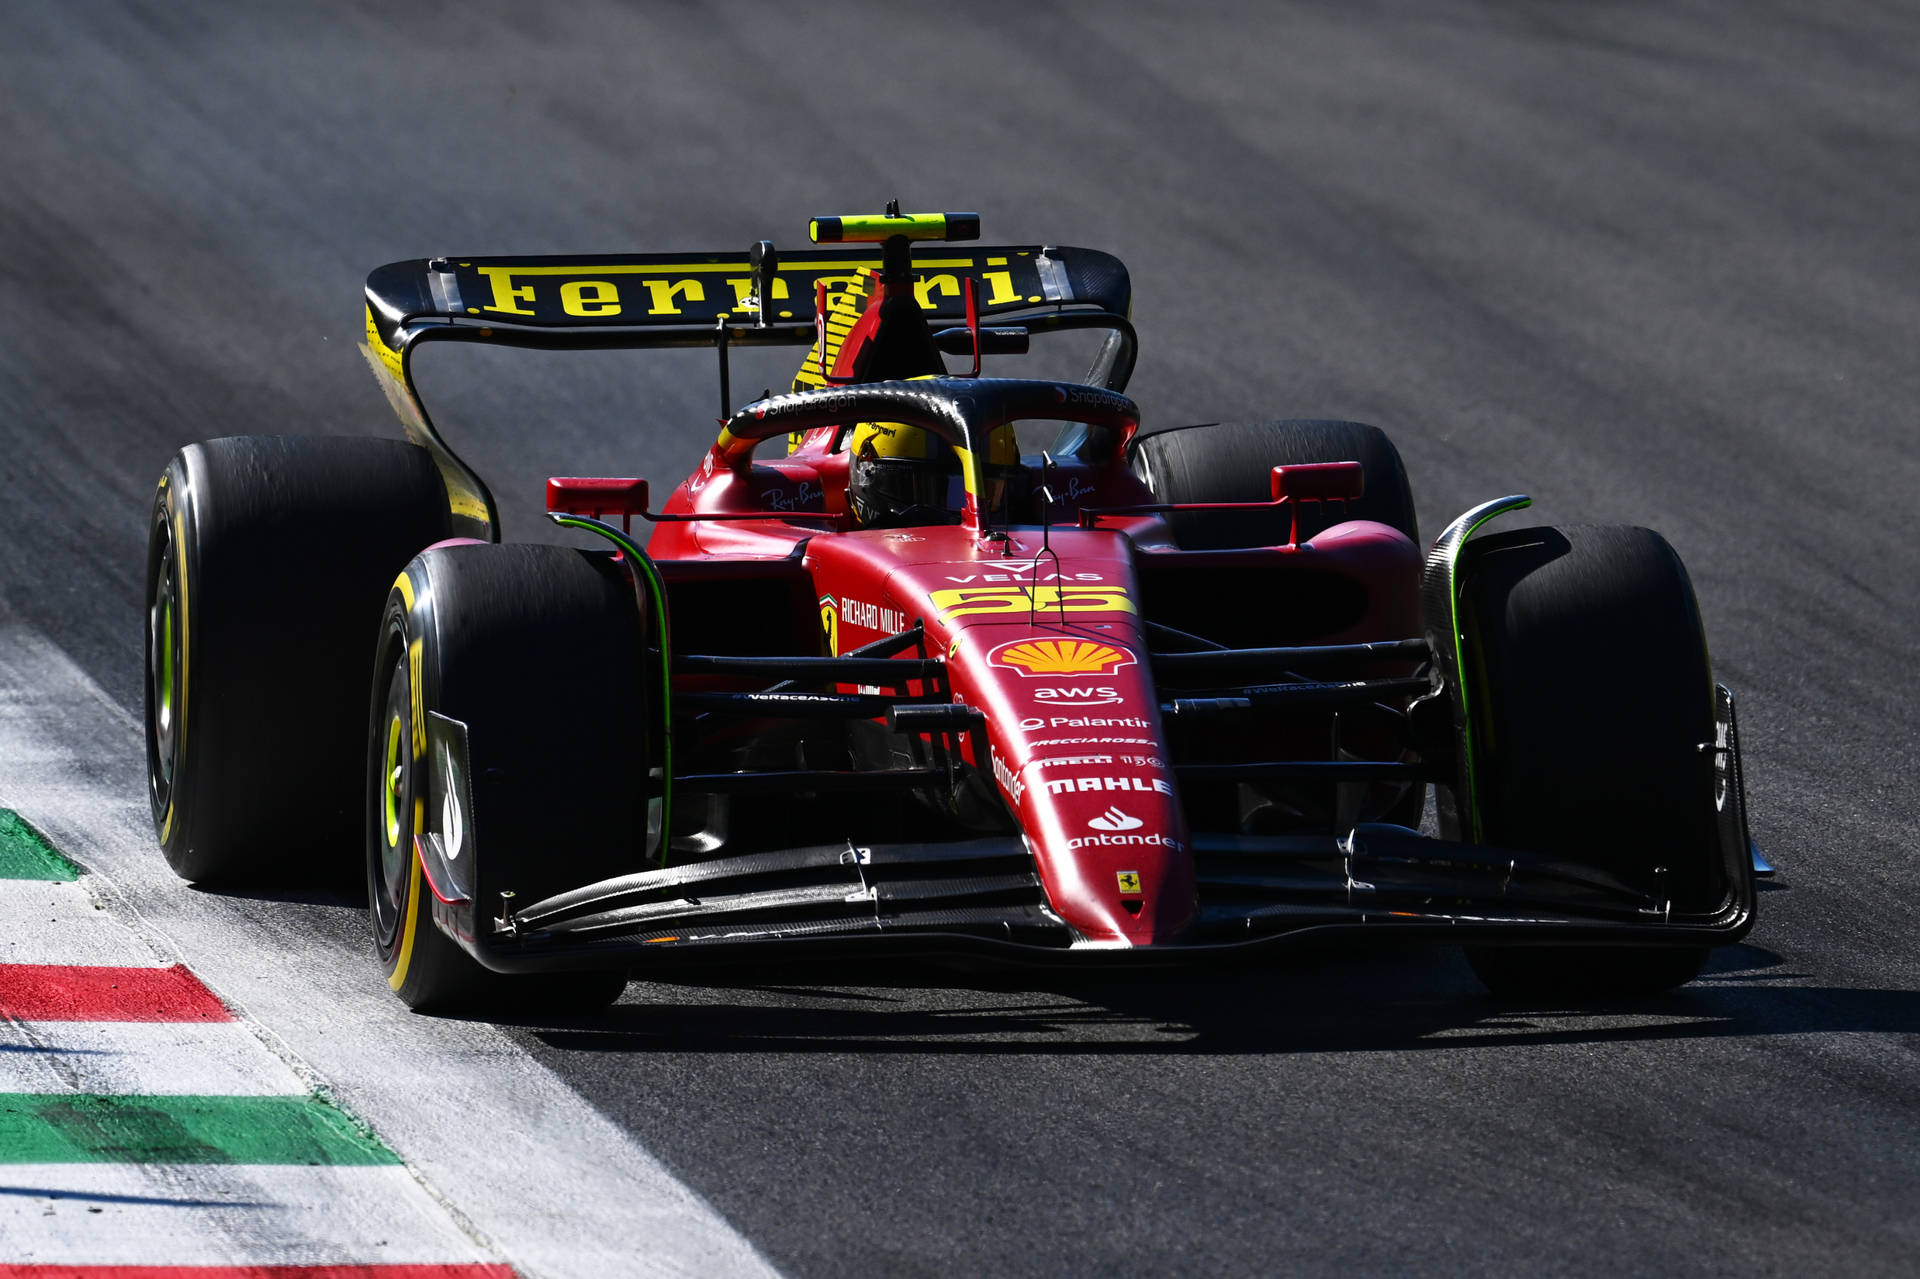 Carlos Sainz Jr in his blazing red Ferrari at a Grand Prix Wallpaper